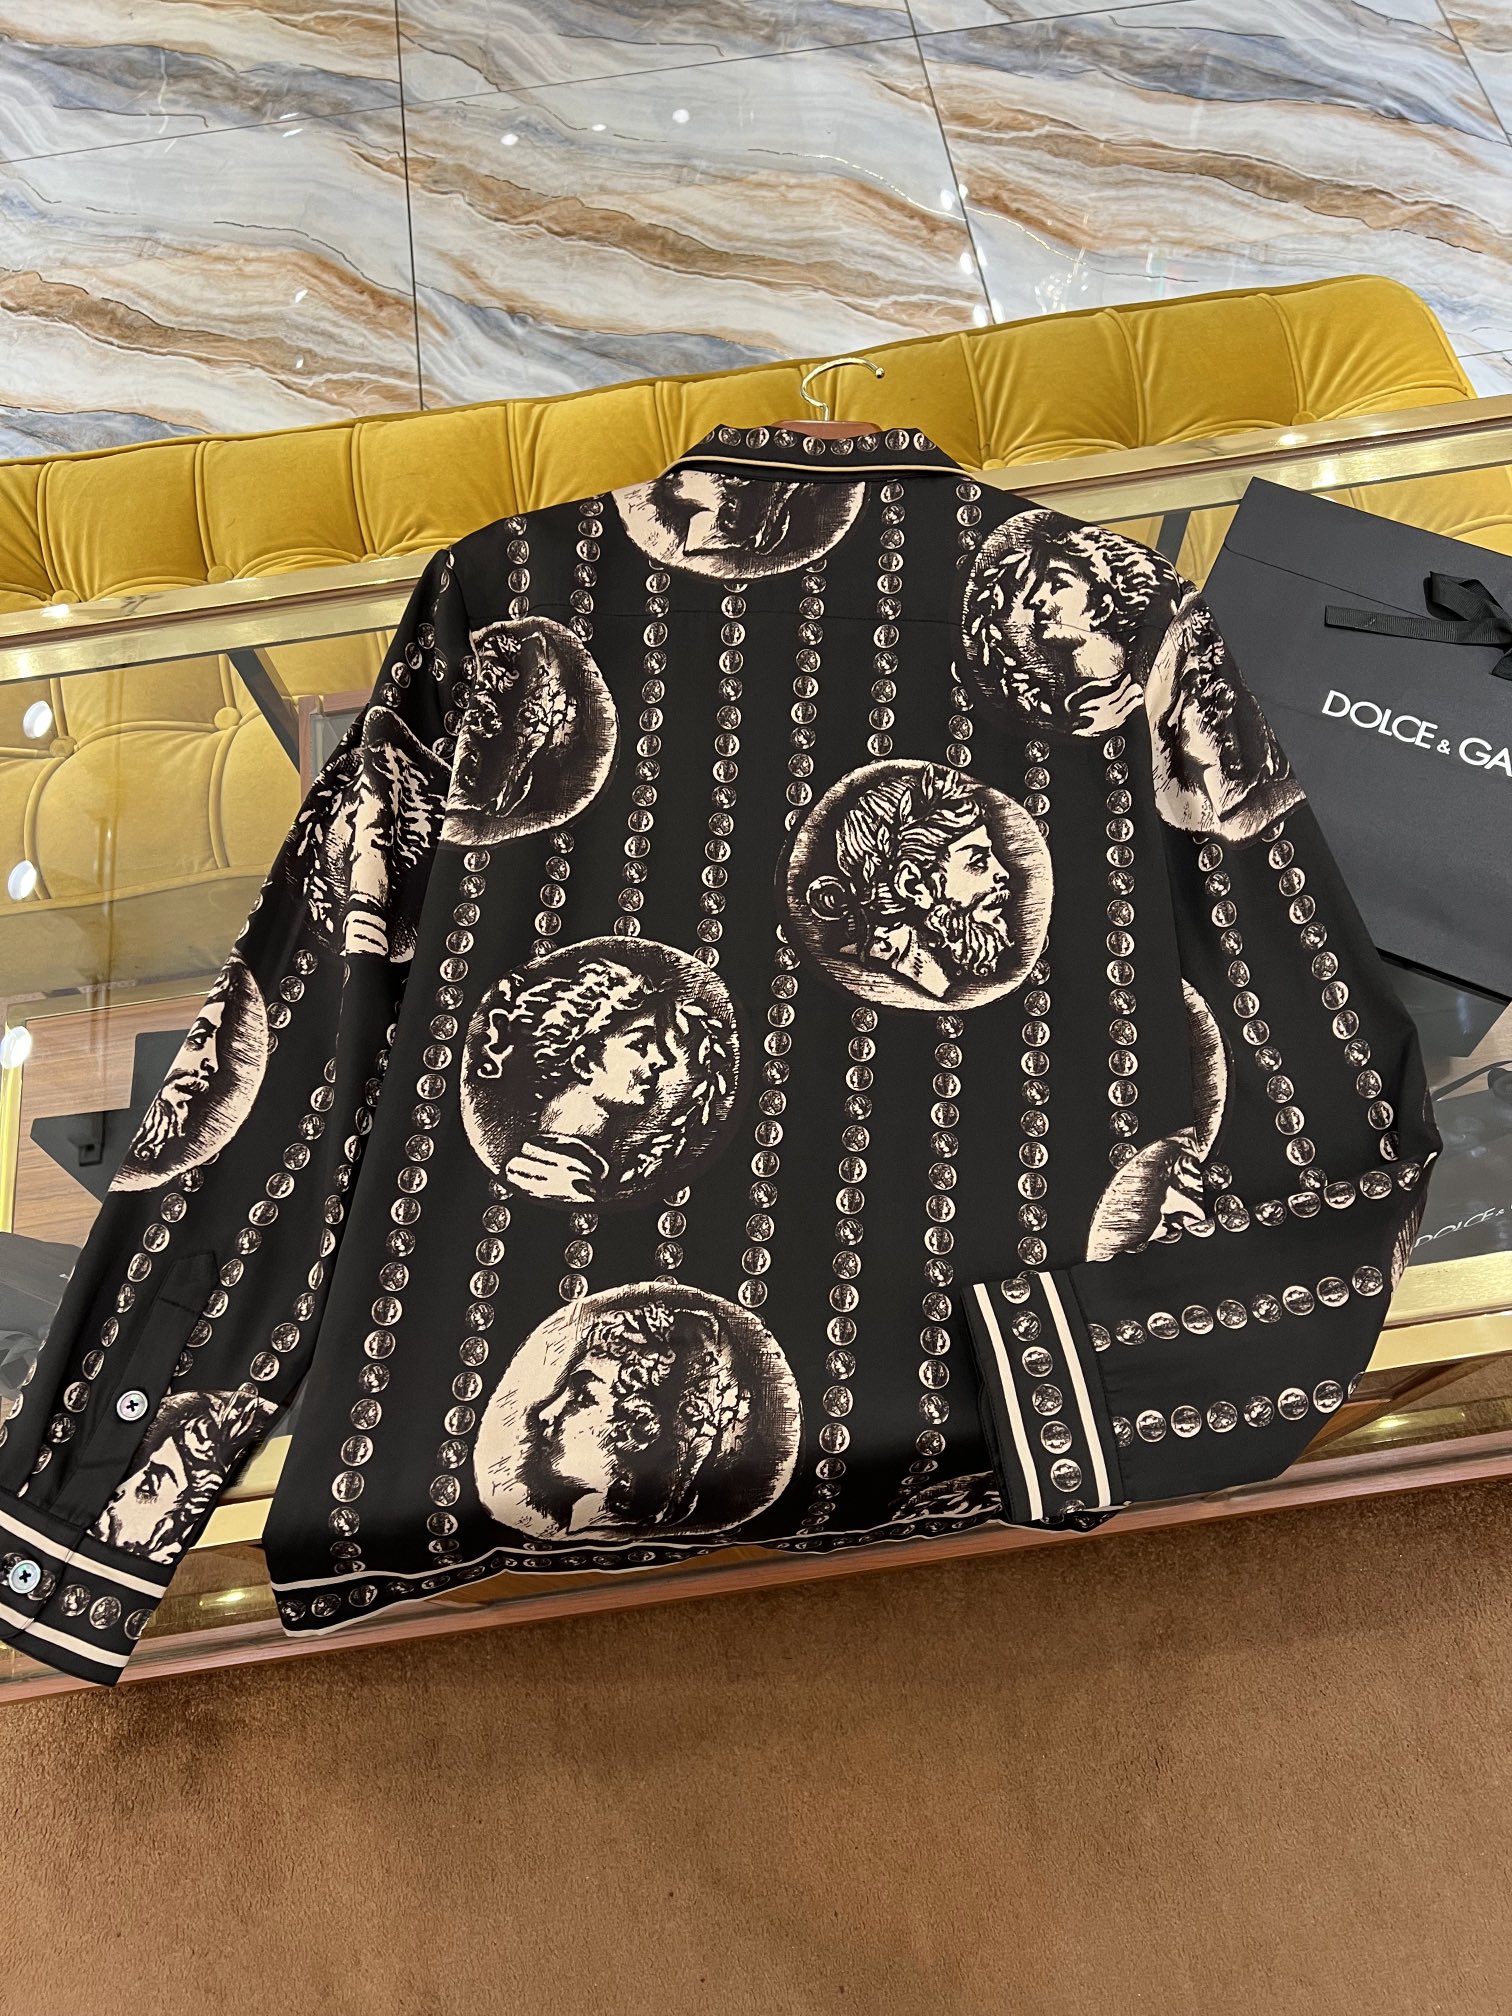 SS新款时装套装高级丝料罗马系列印花工艺休闲外穿居家睡衣都合适一套售不拆卖码数44-52